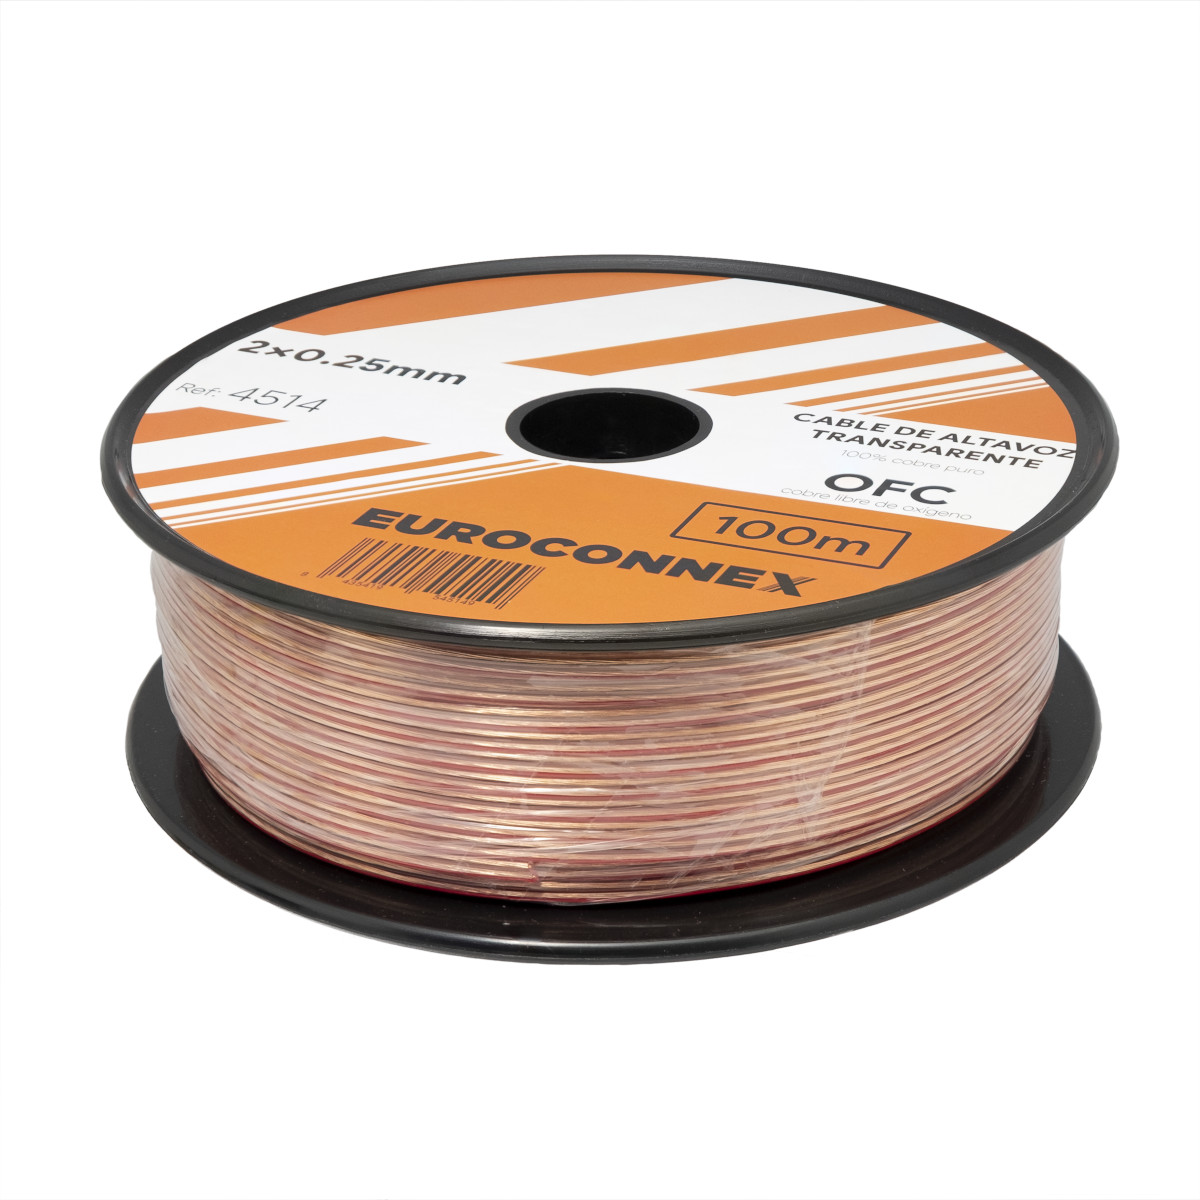 2x0.25mm² Trasnparent Speaker Cable, OFC Bare Copper, 100m